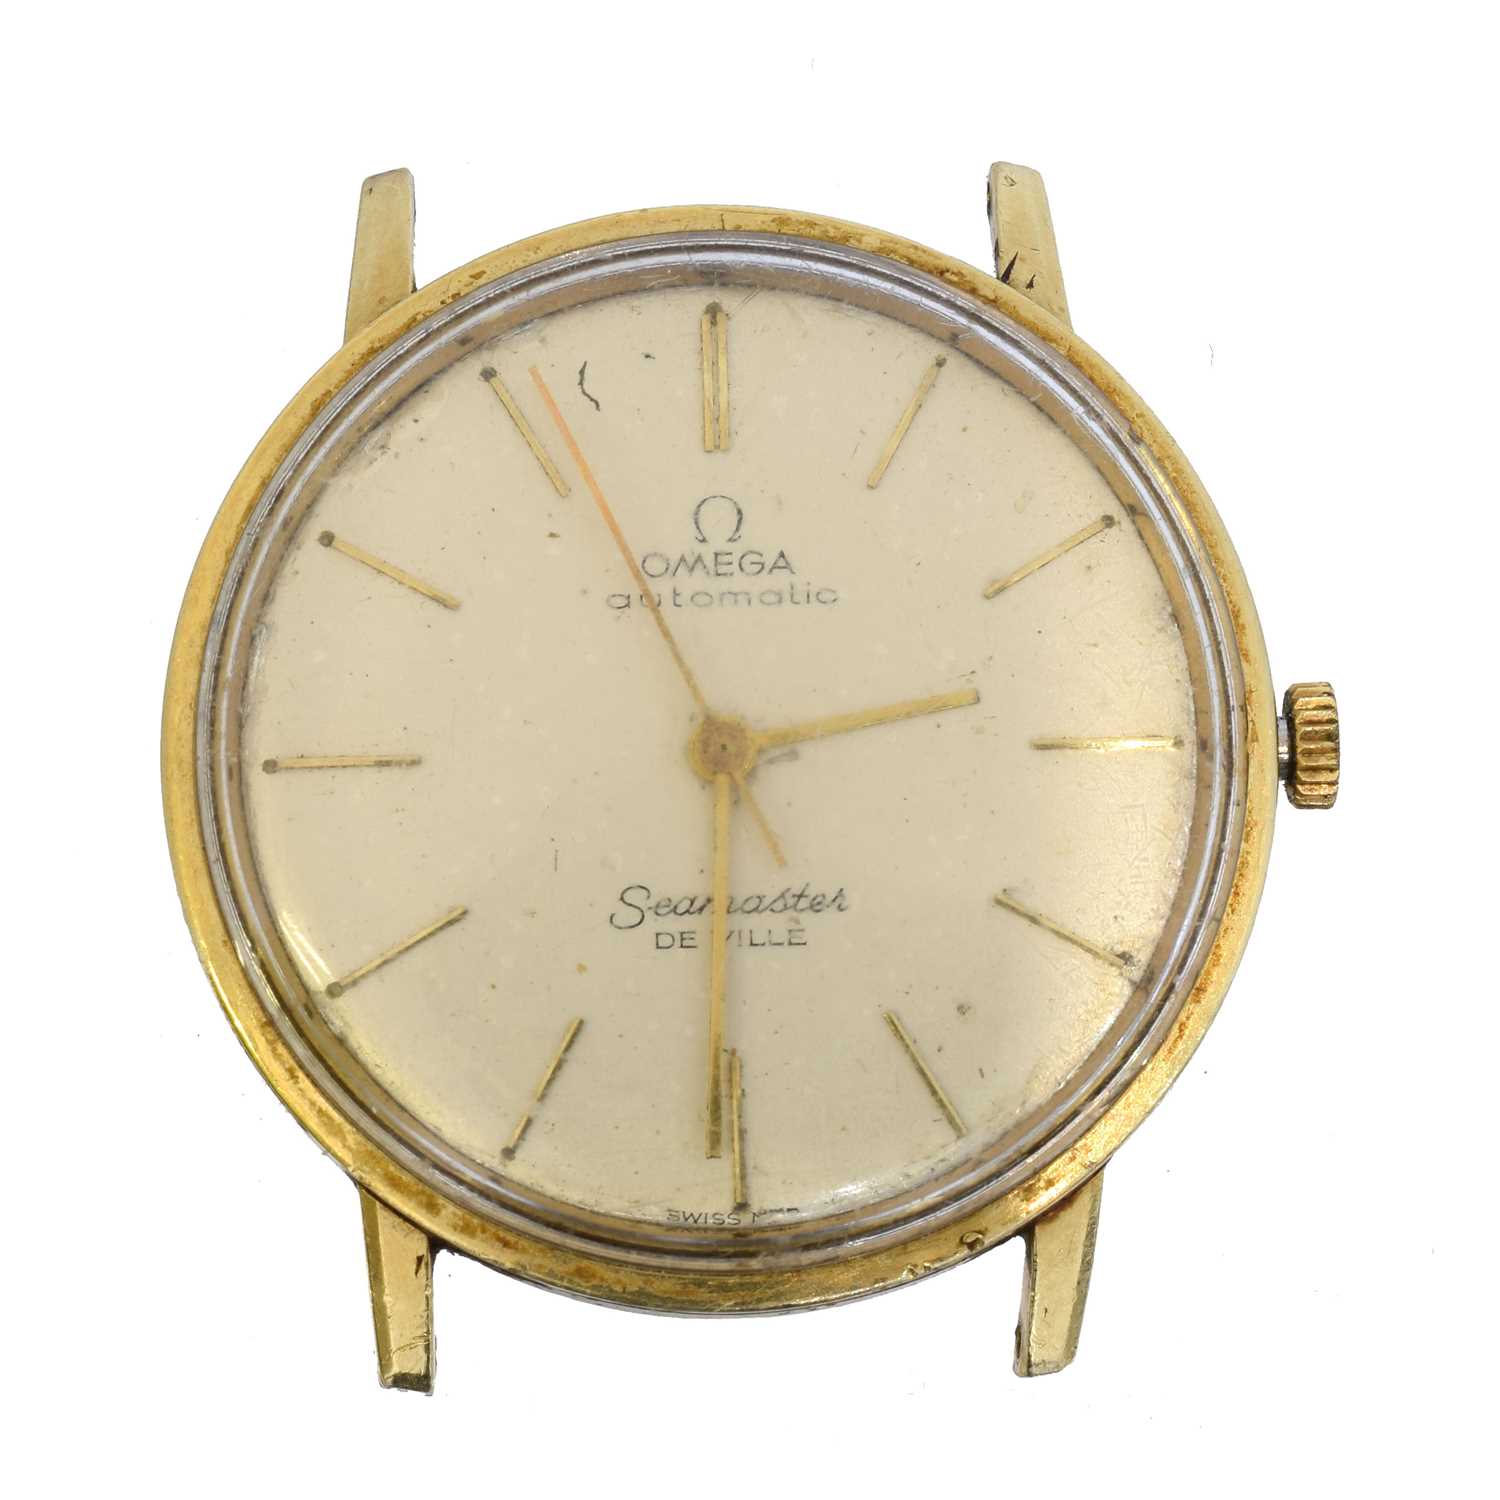 A 1960s Omega Seamaster De Ville automatic wristwatch,